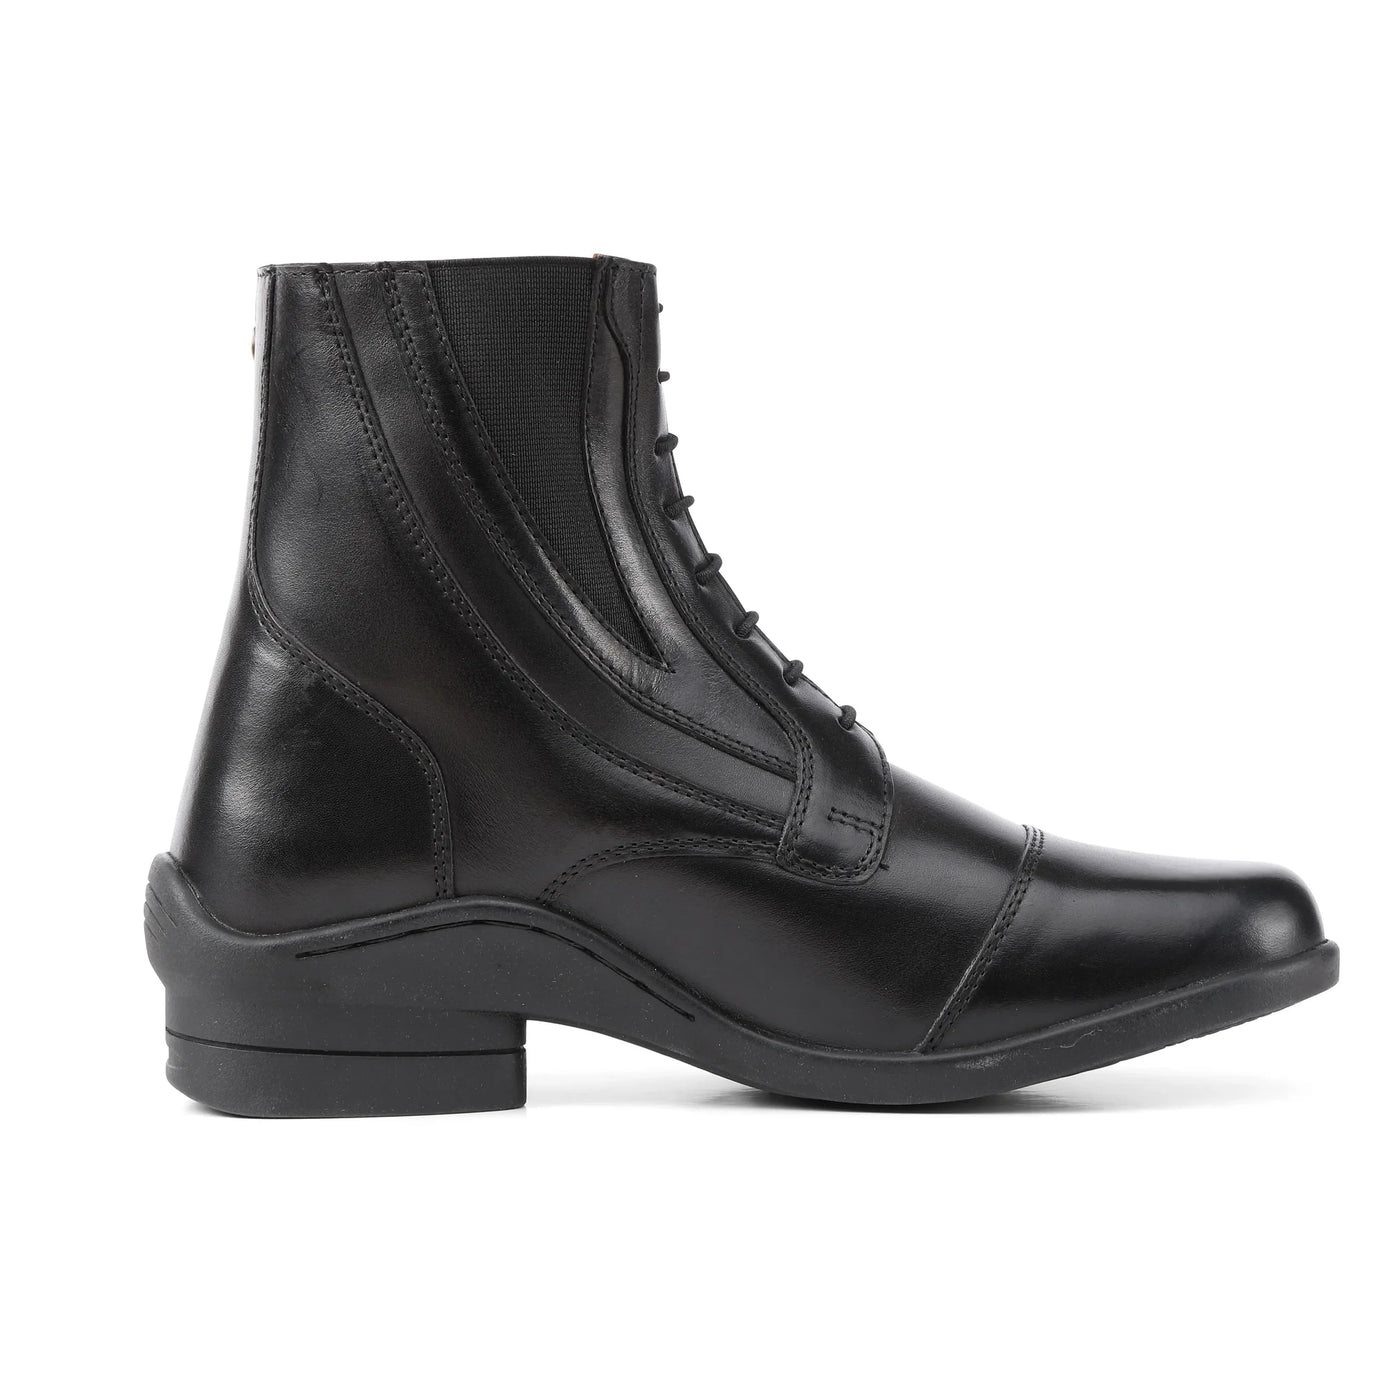 Shires Moretta Alessia Leather Paddock Boot - Black 9733